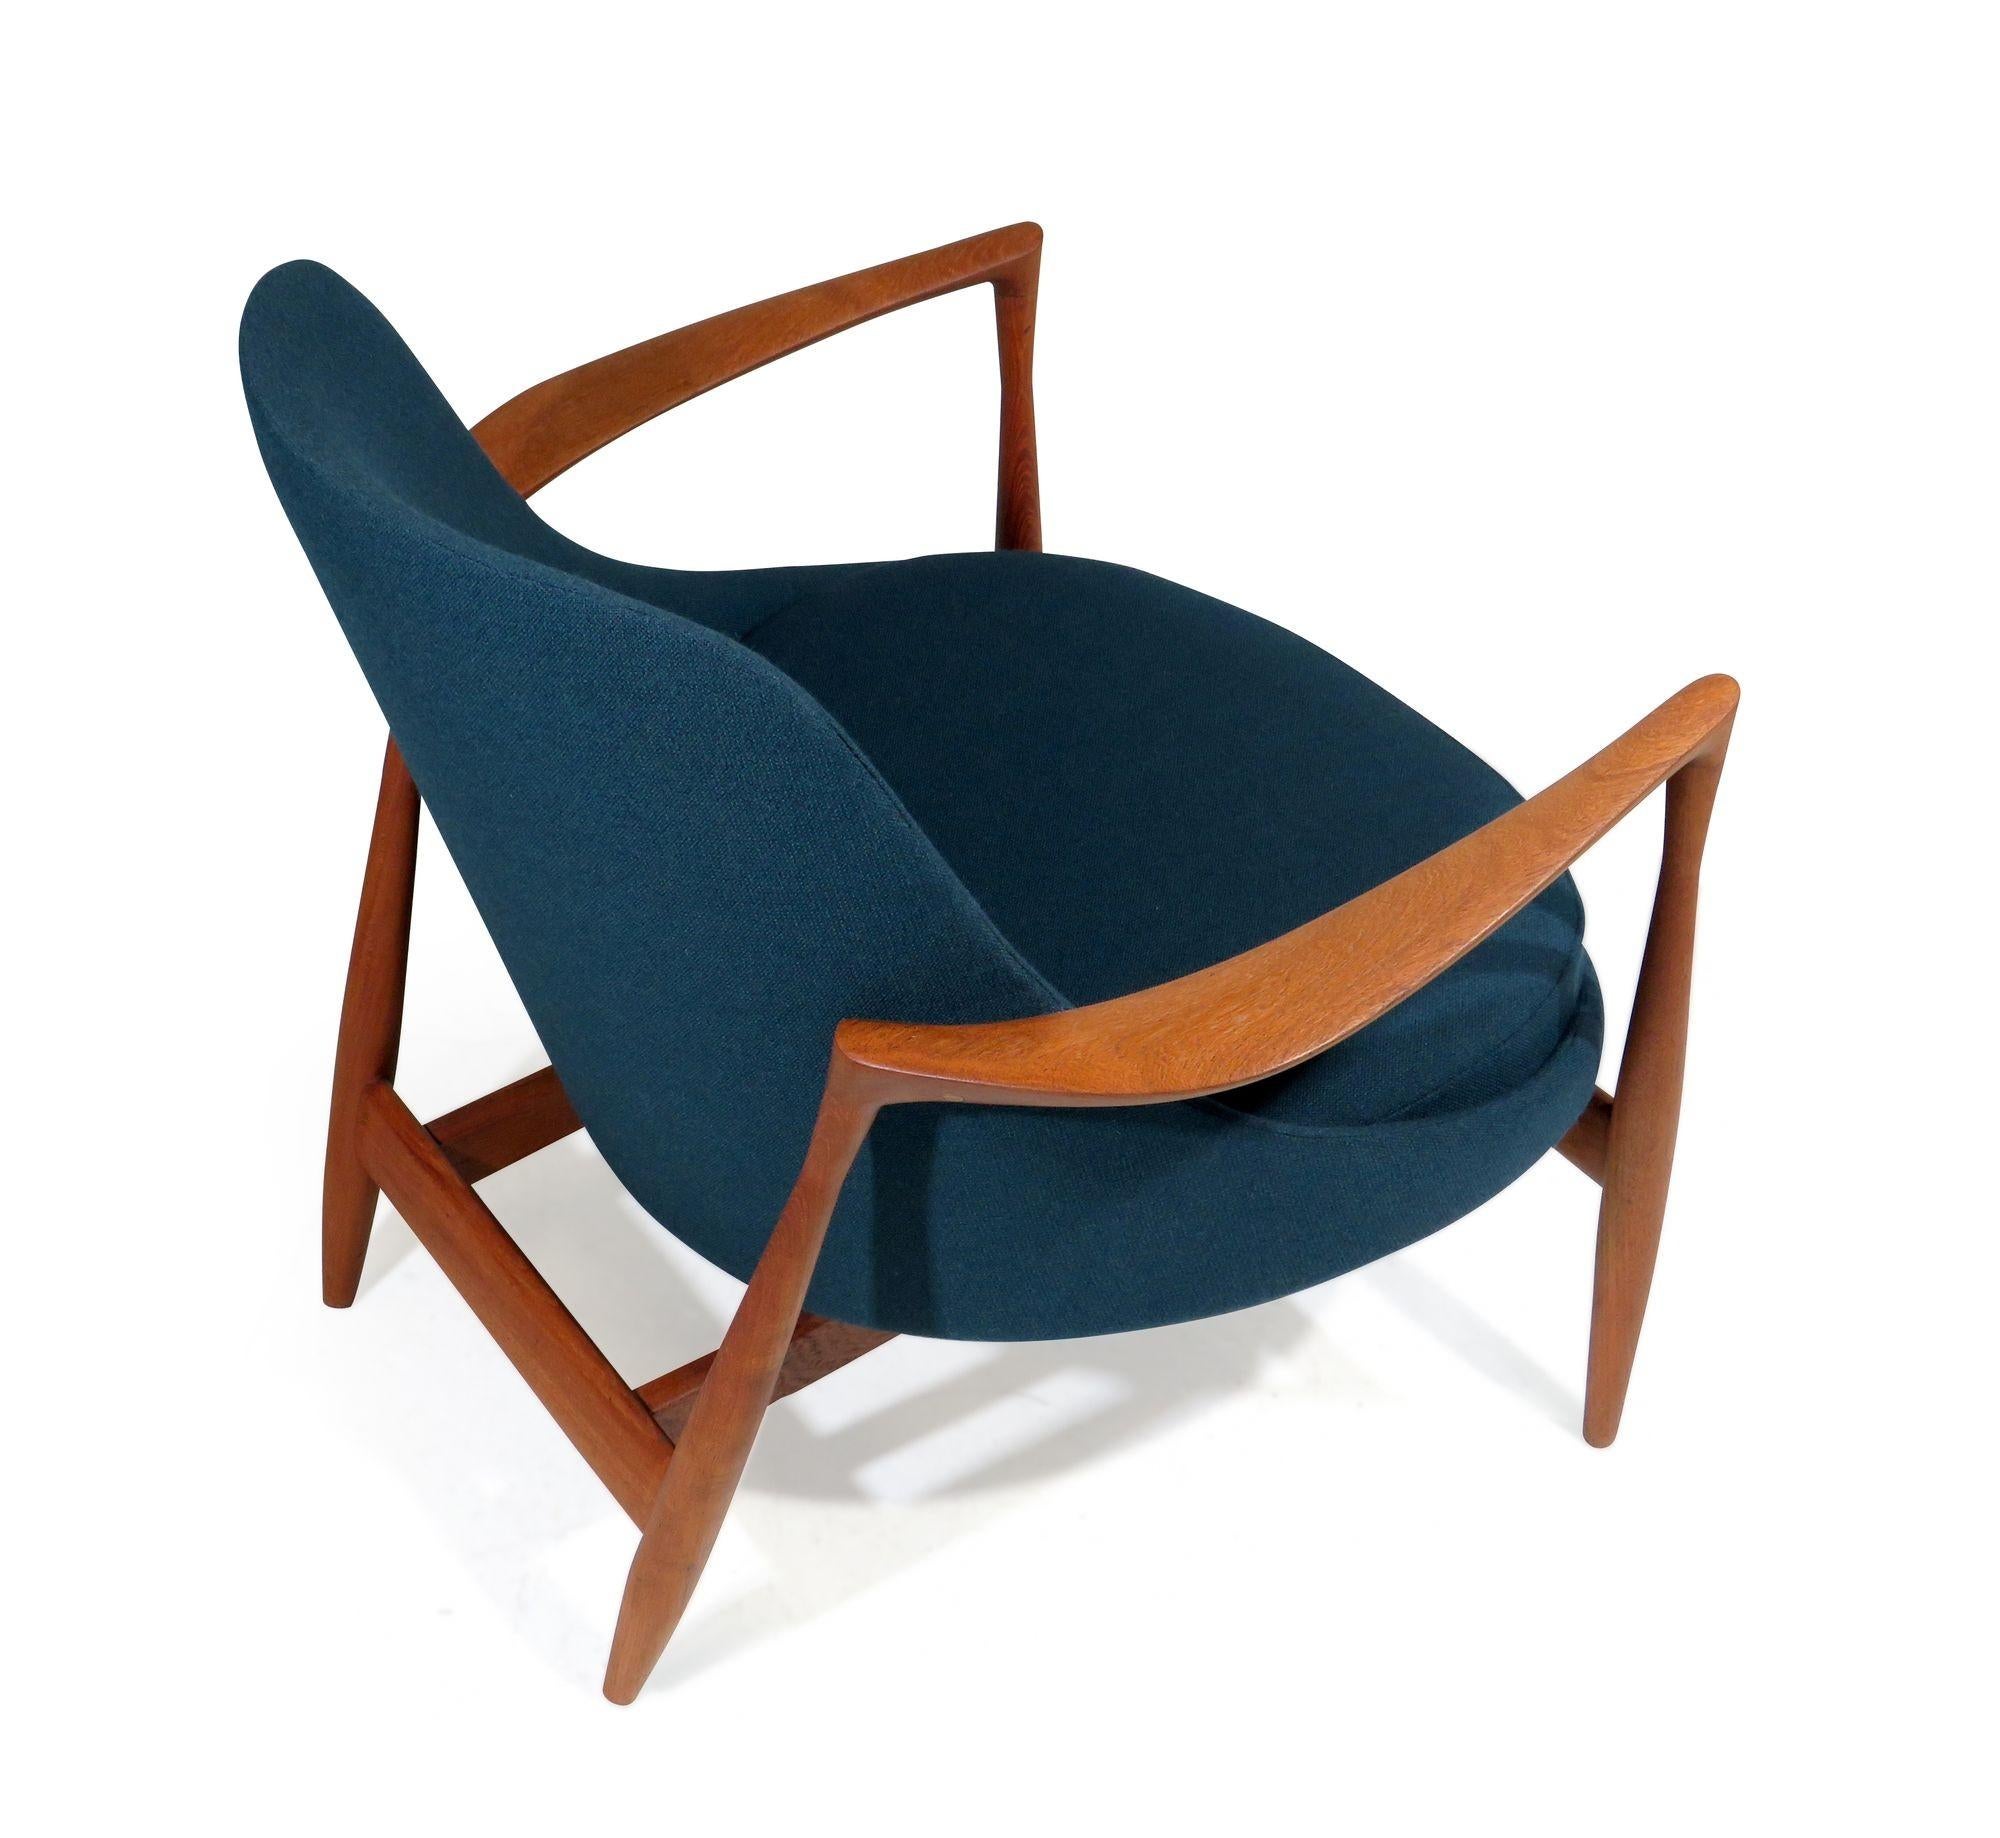 [Queen] Elizabeth Lounge Chairs by IB Kofod Larsen U56 3